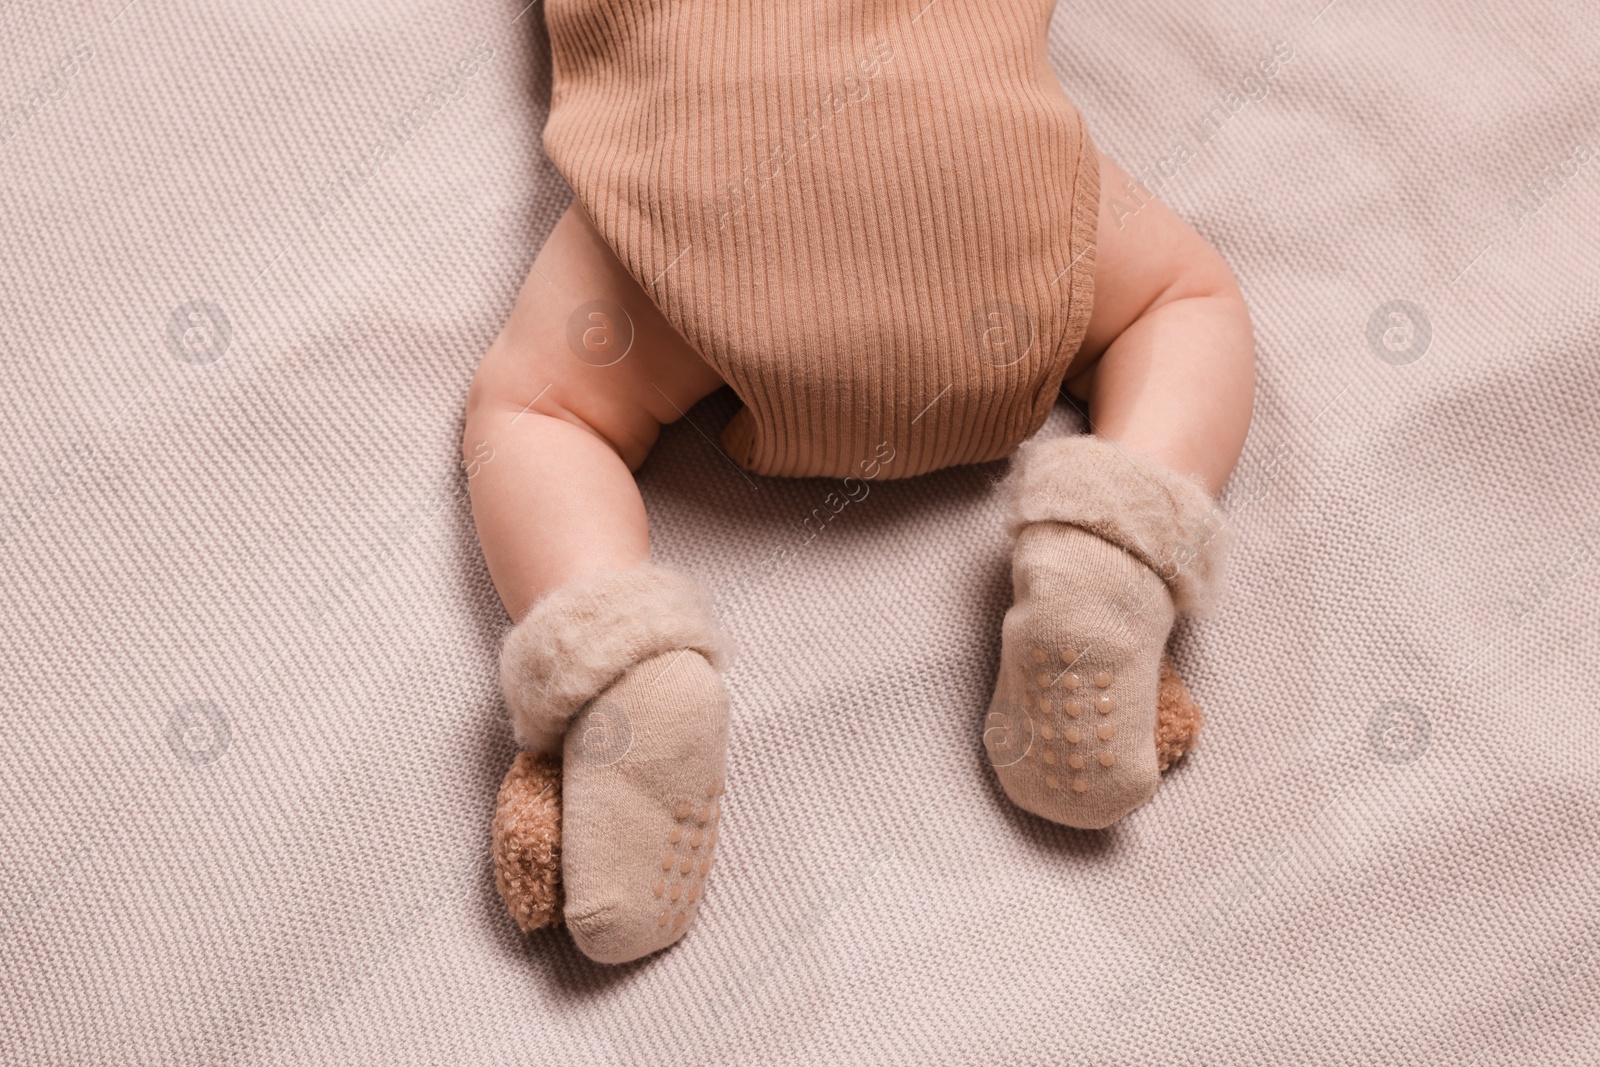 Photo of Newborn baby lying on brown blanket, top view